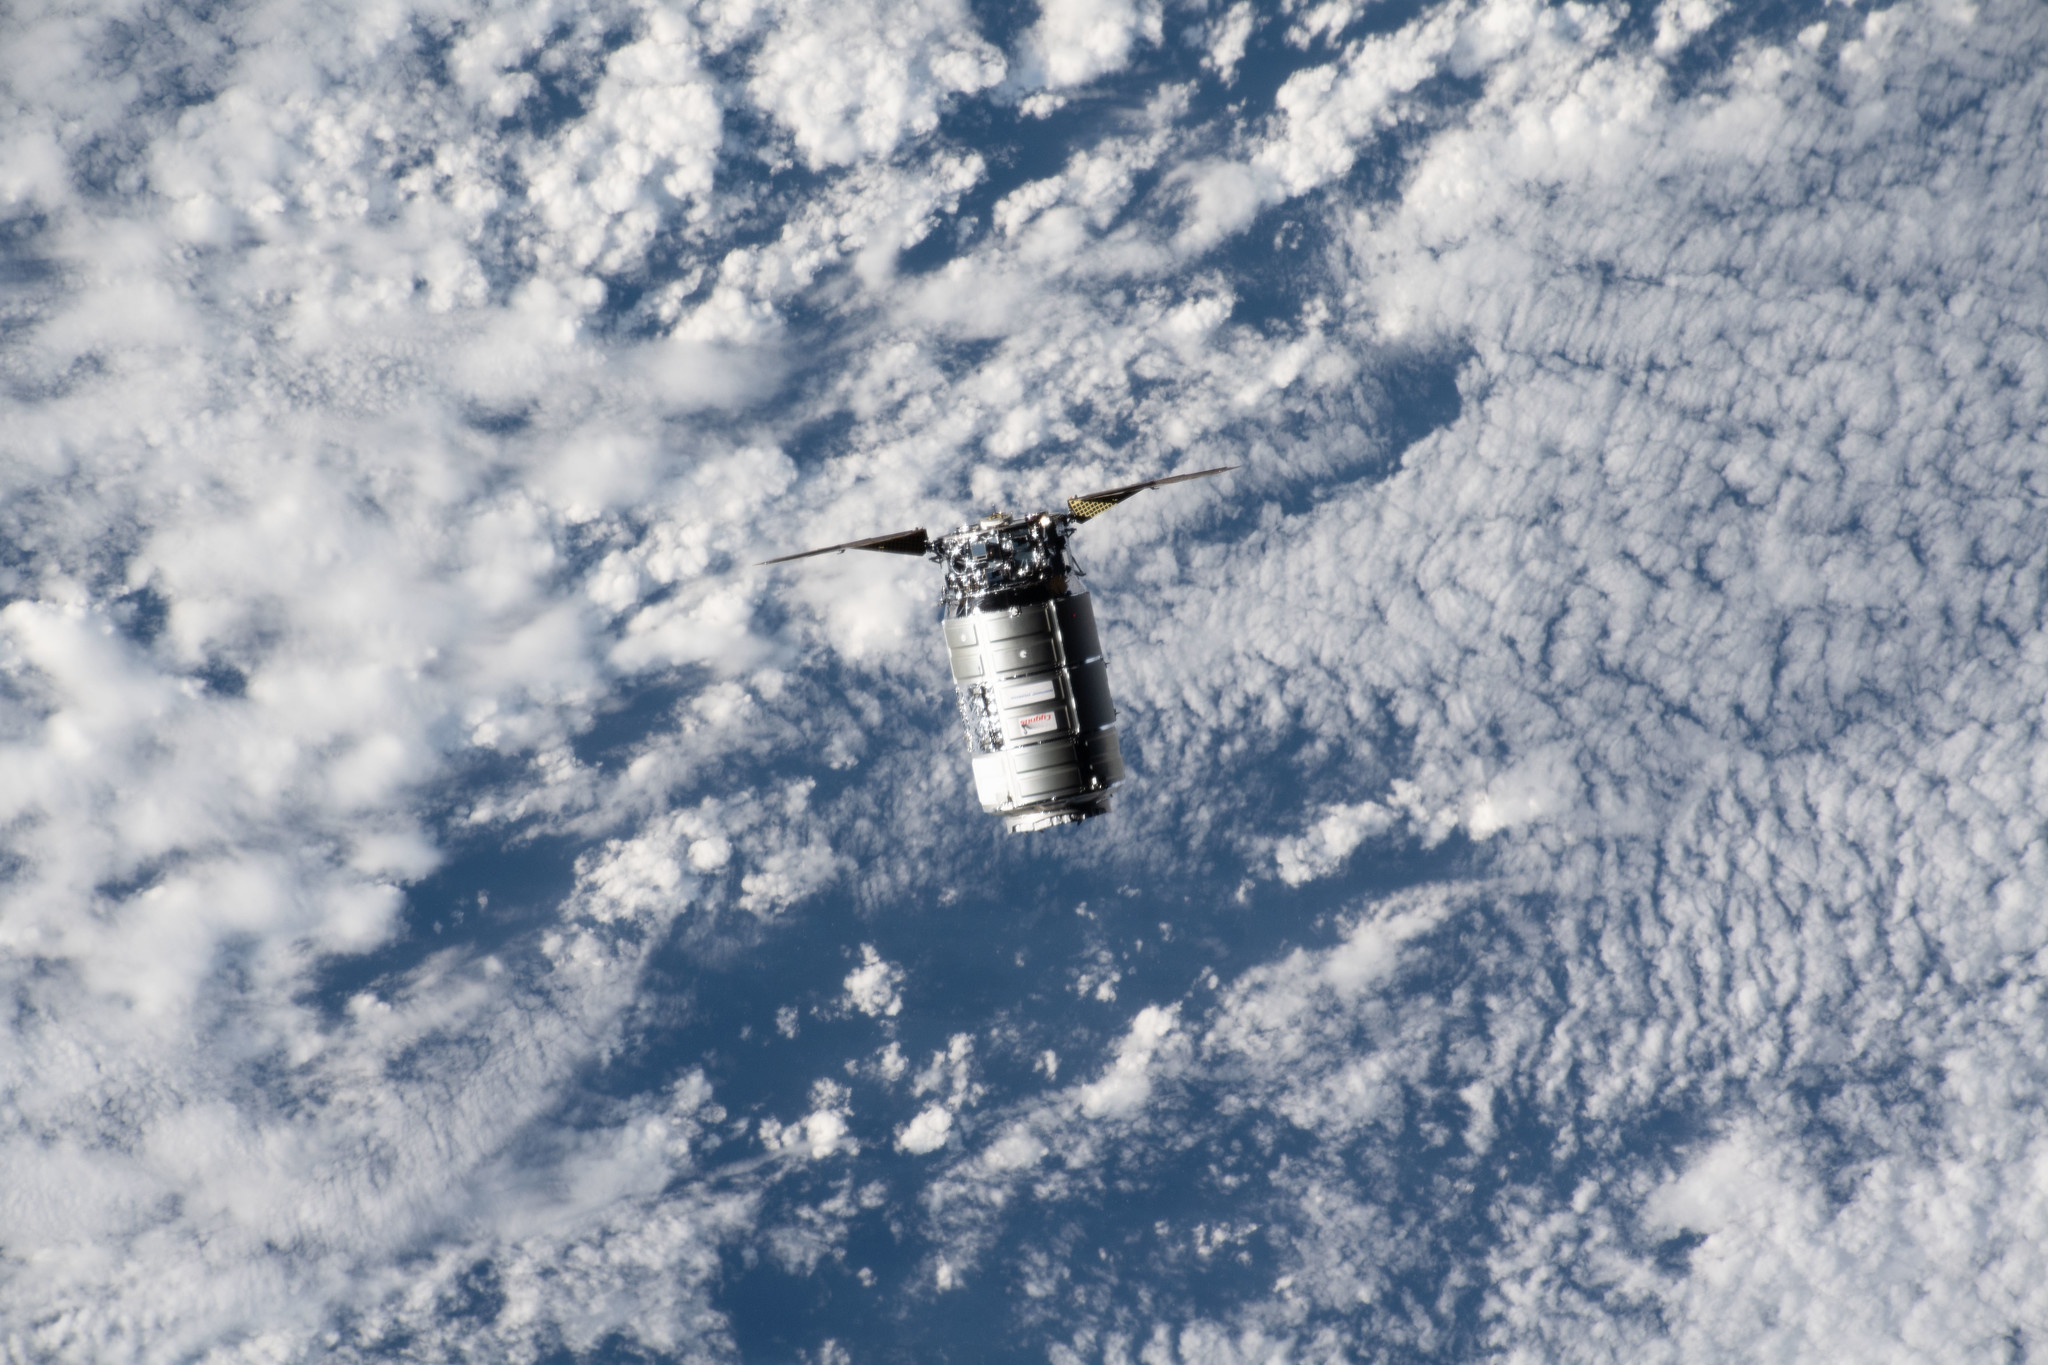 Northrop Grumman's Cygnus cargo craft approaches the International Space Station